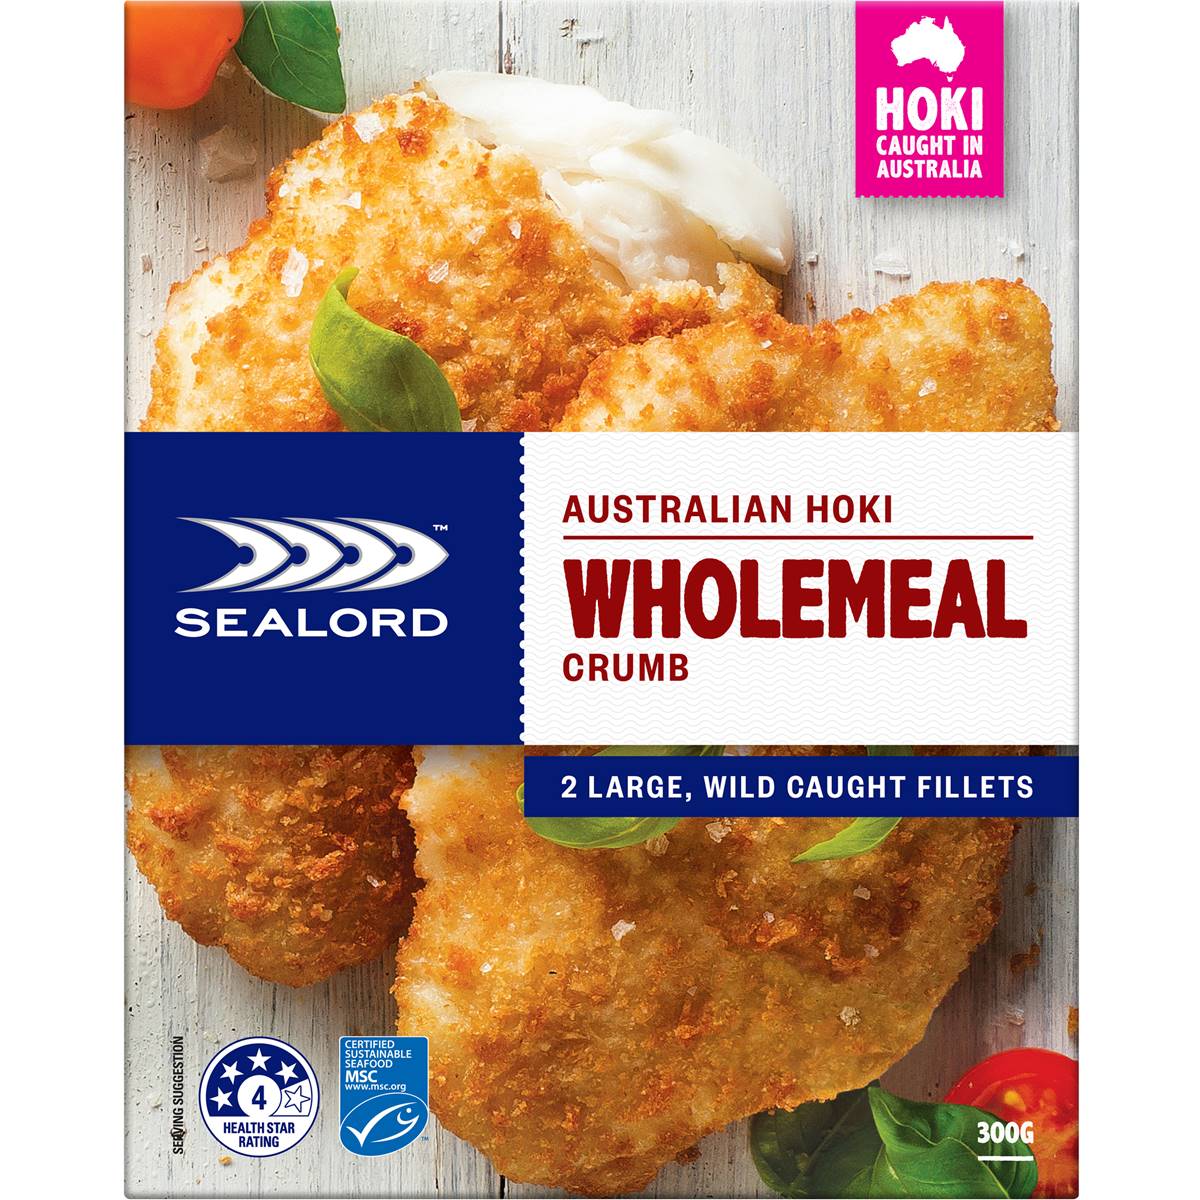 Calories in Sealord Australian Hoki Wholemeal Crumb Wild Caught Fillets